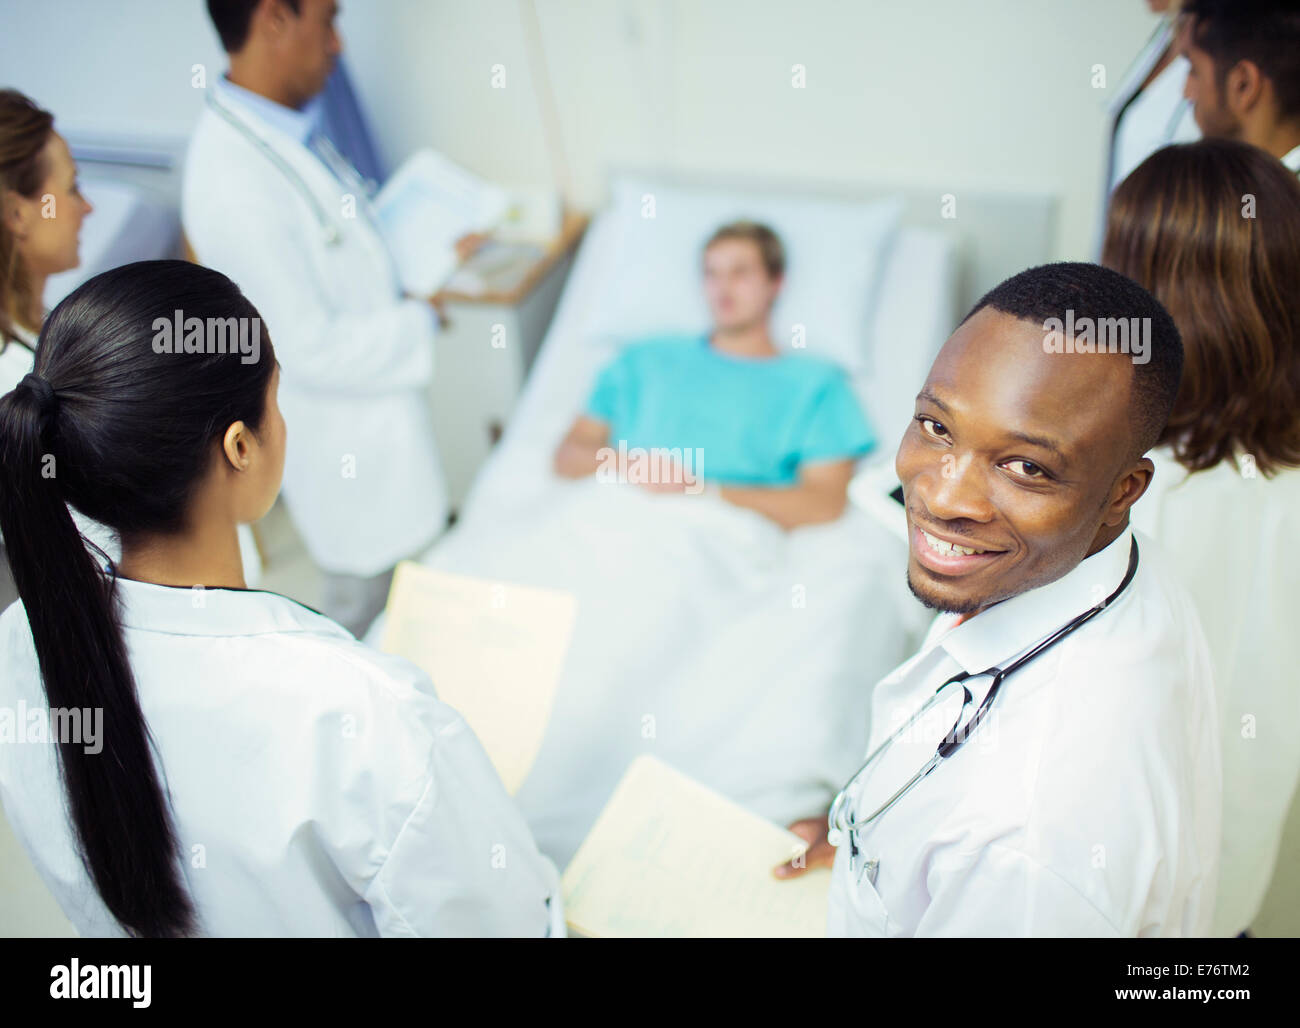 Doctor standing in hospital room avec les résidents Banque D'Images